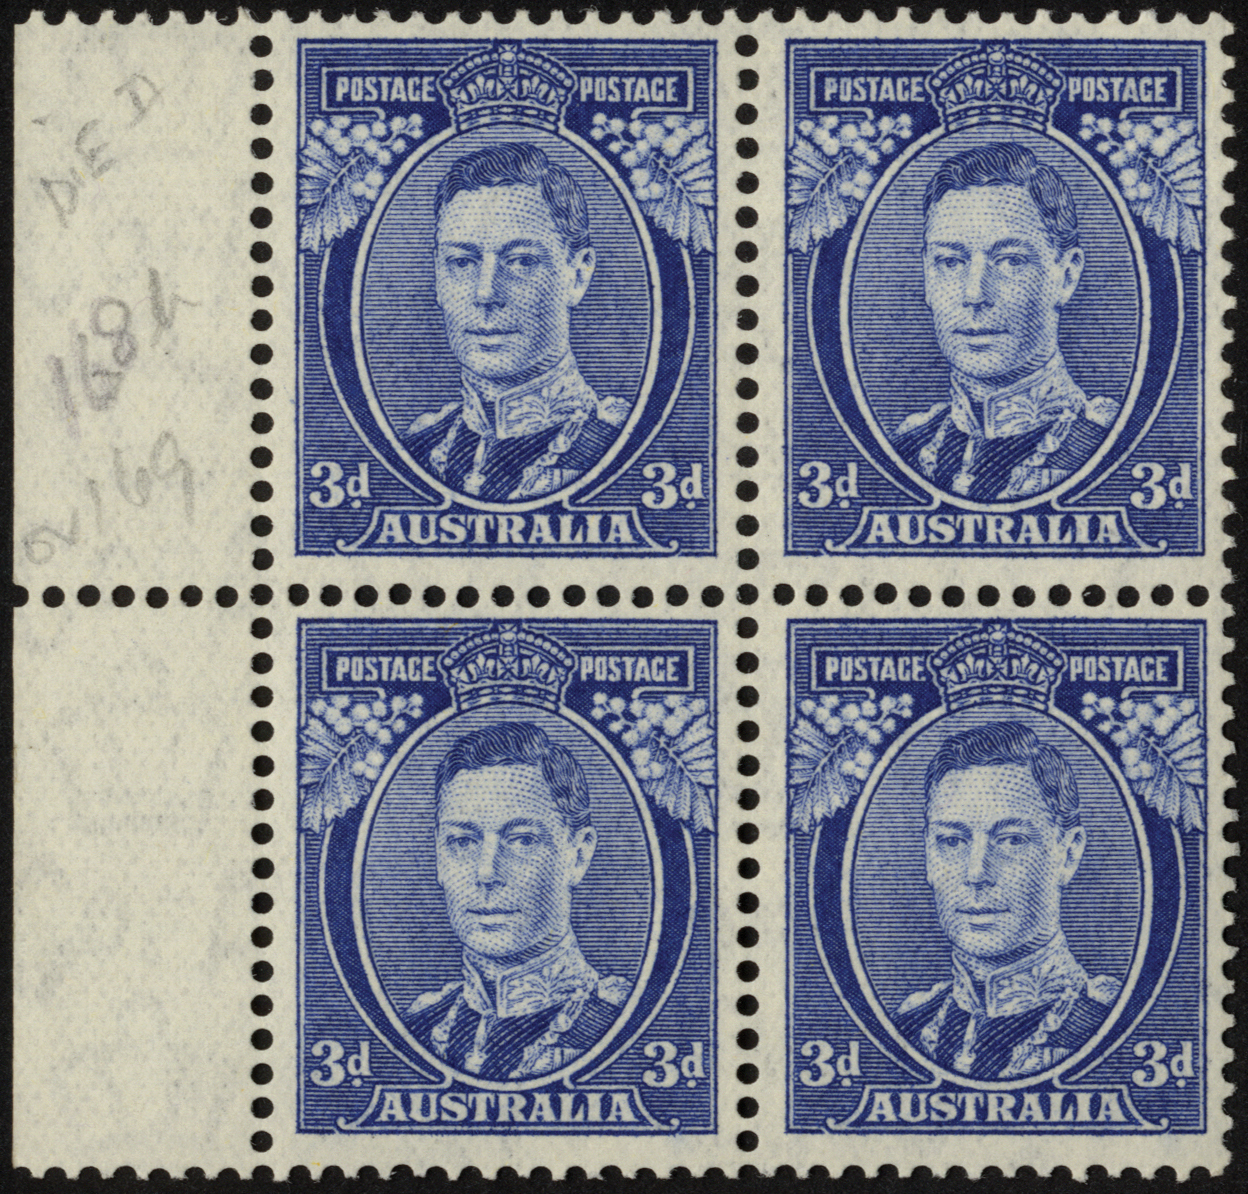 Australia. 1938 3d bright blue Die II, unmounted mint marginal block of four. SG 168ca (£240)/CW 7a